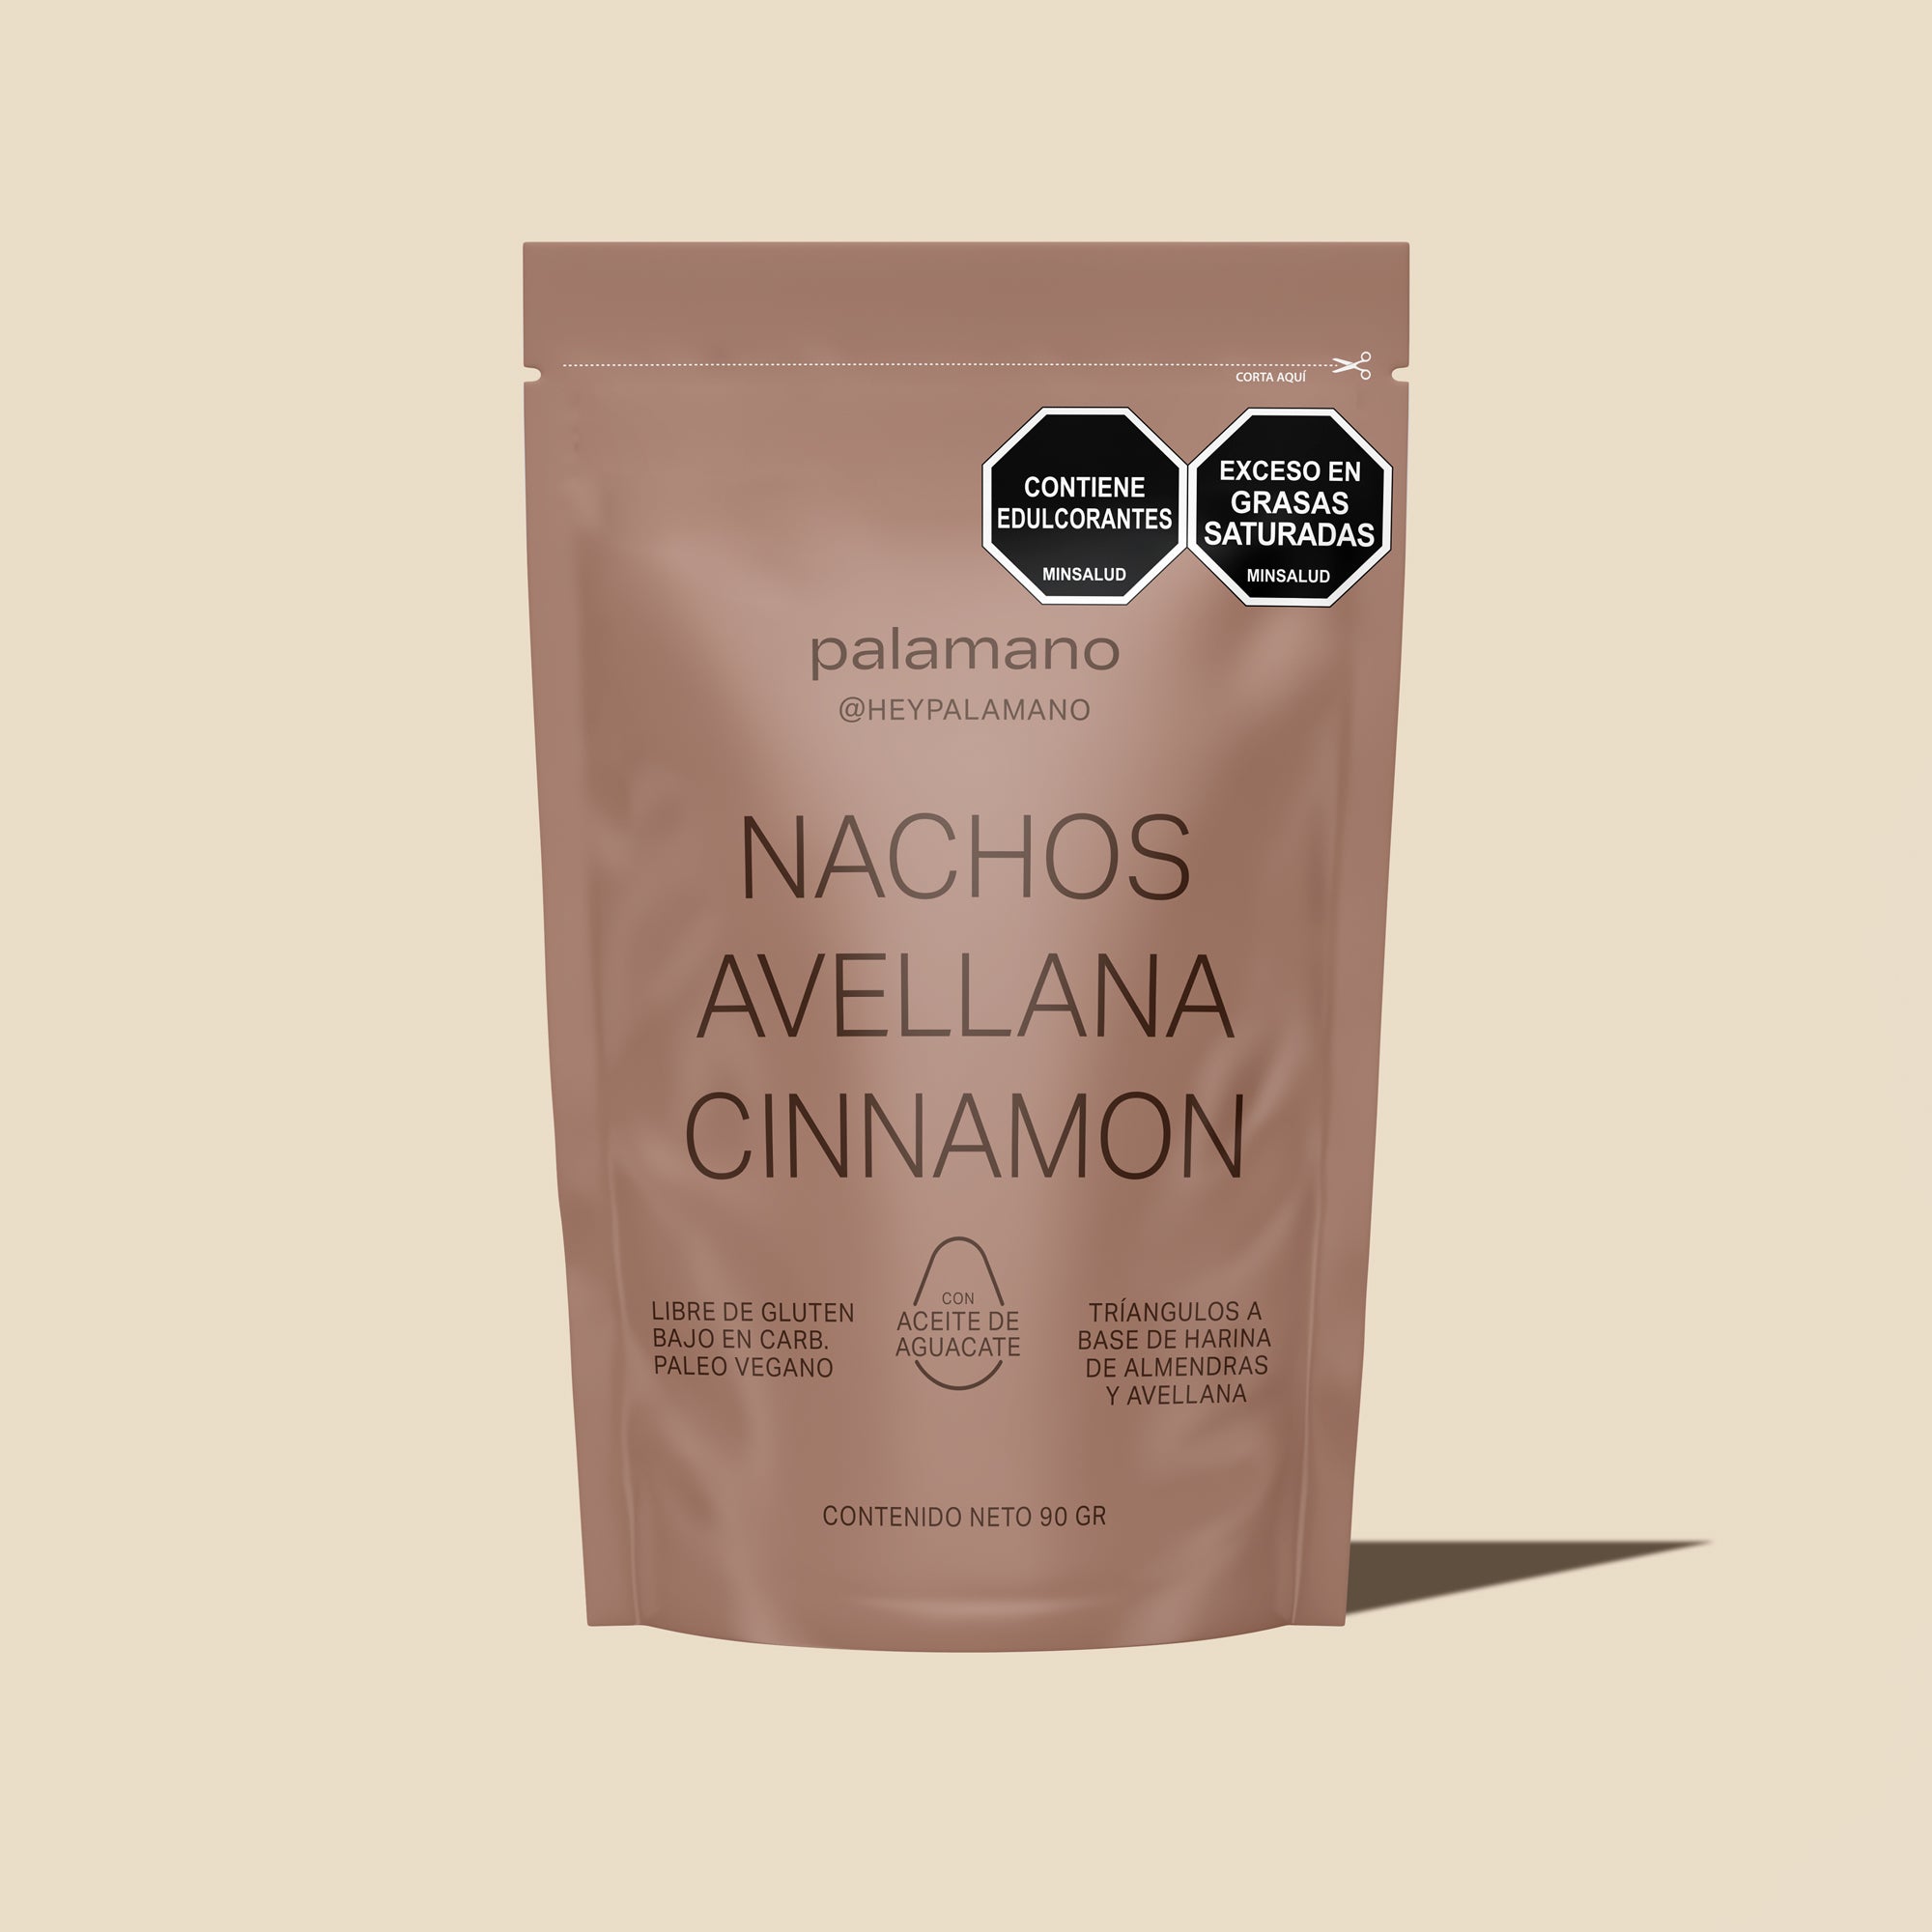 Nachos Avellana Cinnamon